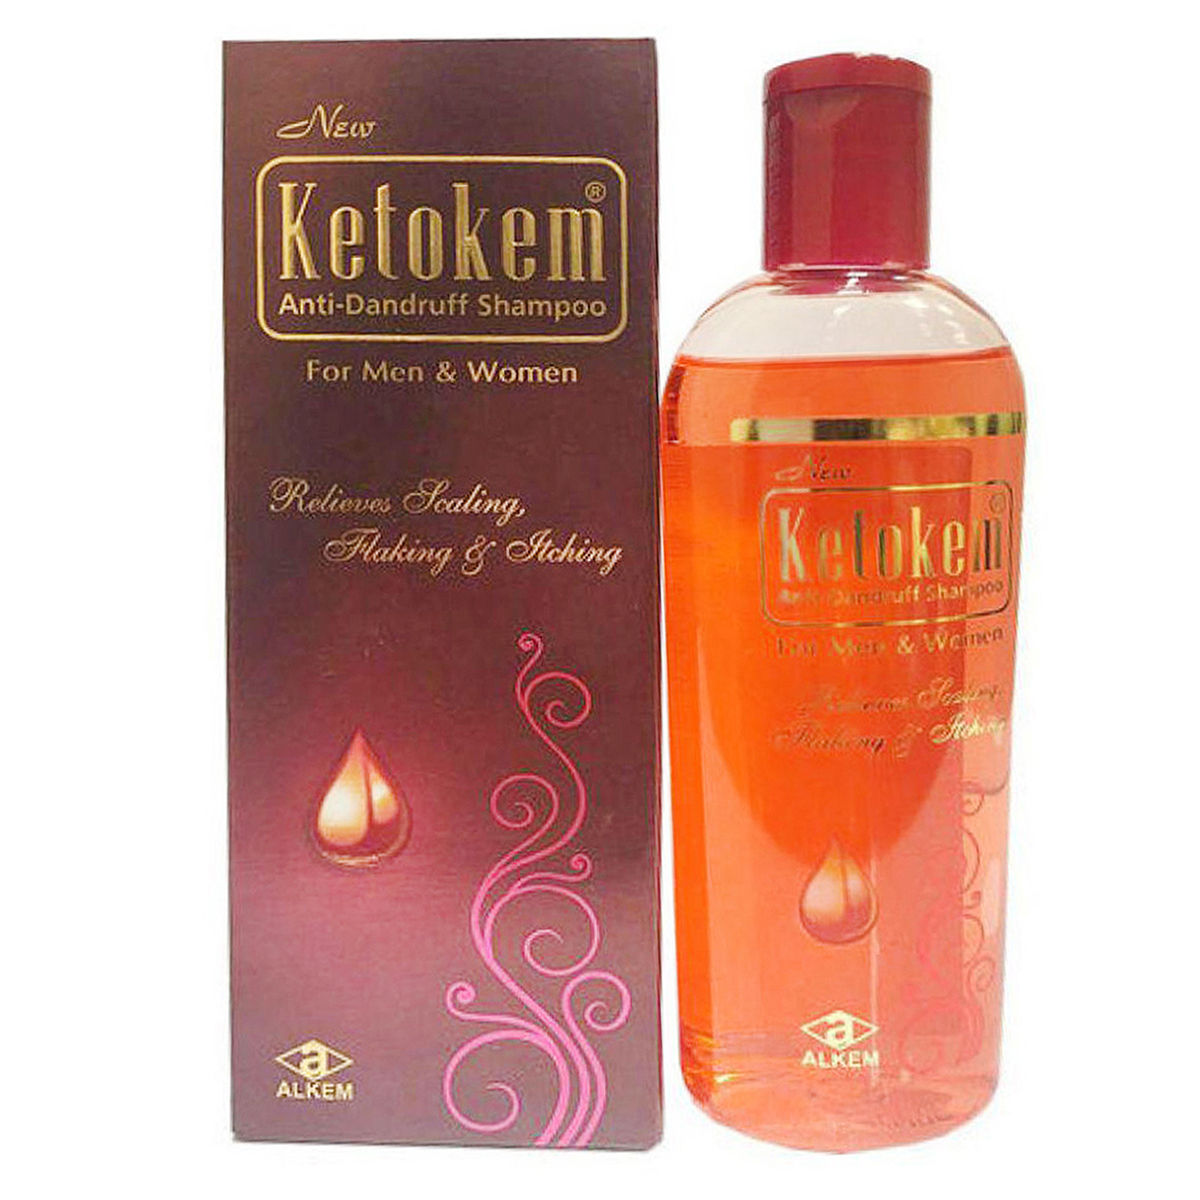 Buy Ketokem Anti-Dandruff Shampoo, 110 ml Online